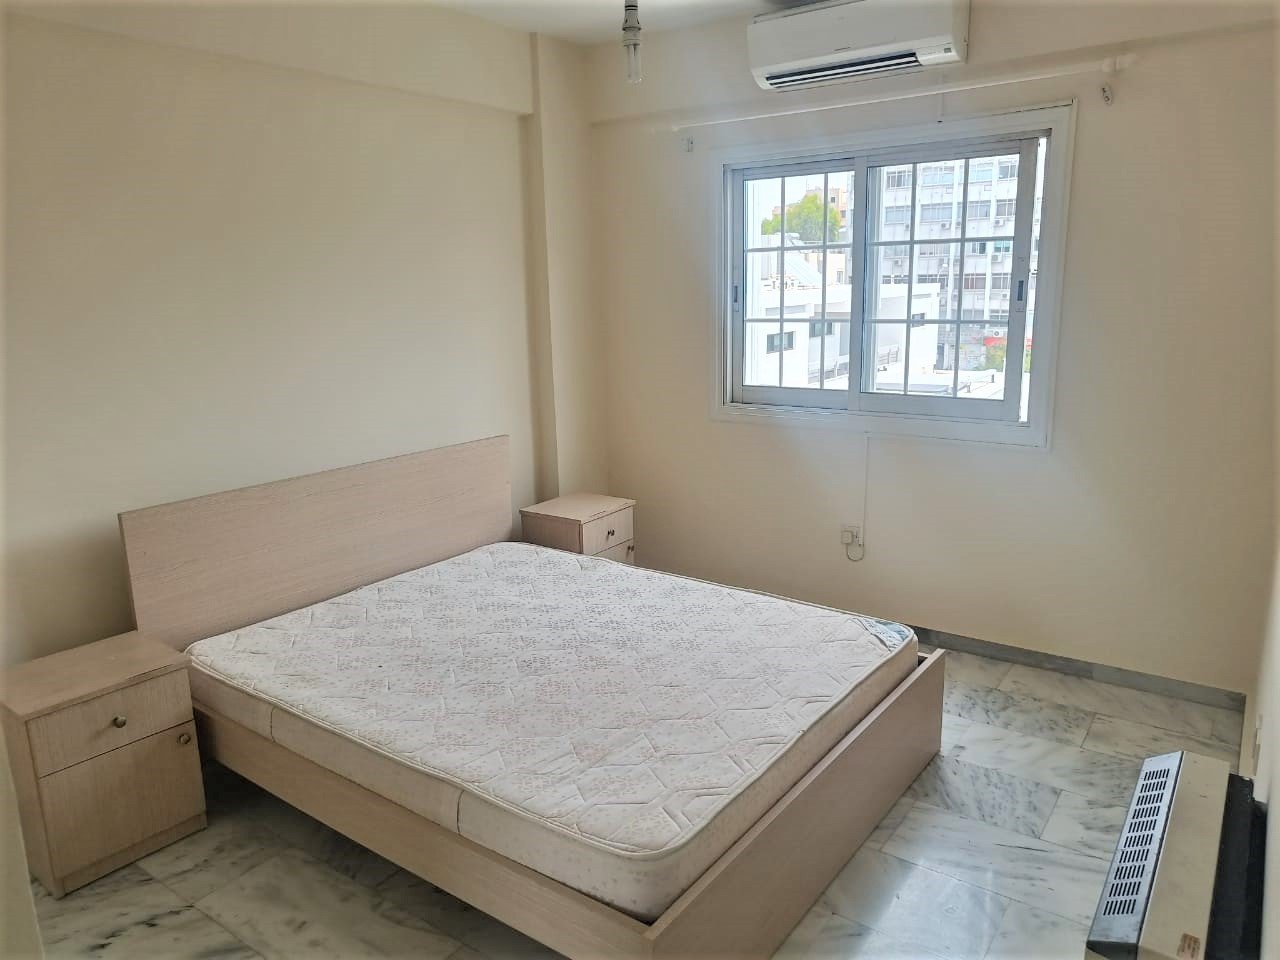 For Rent: Apartments, Engomi, Nicosia, Cyprus FC-38880 - #3